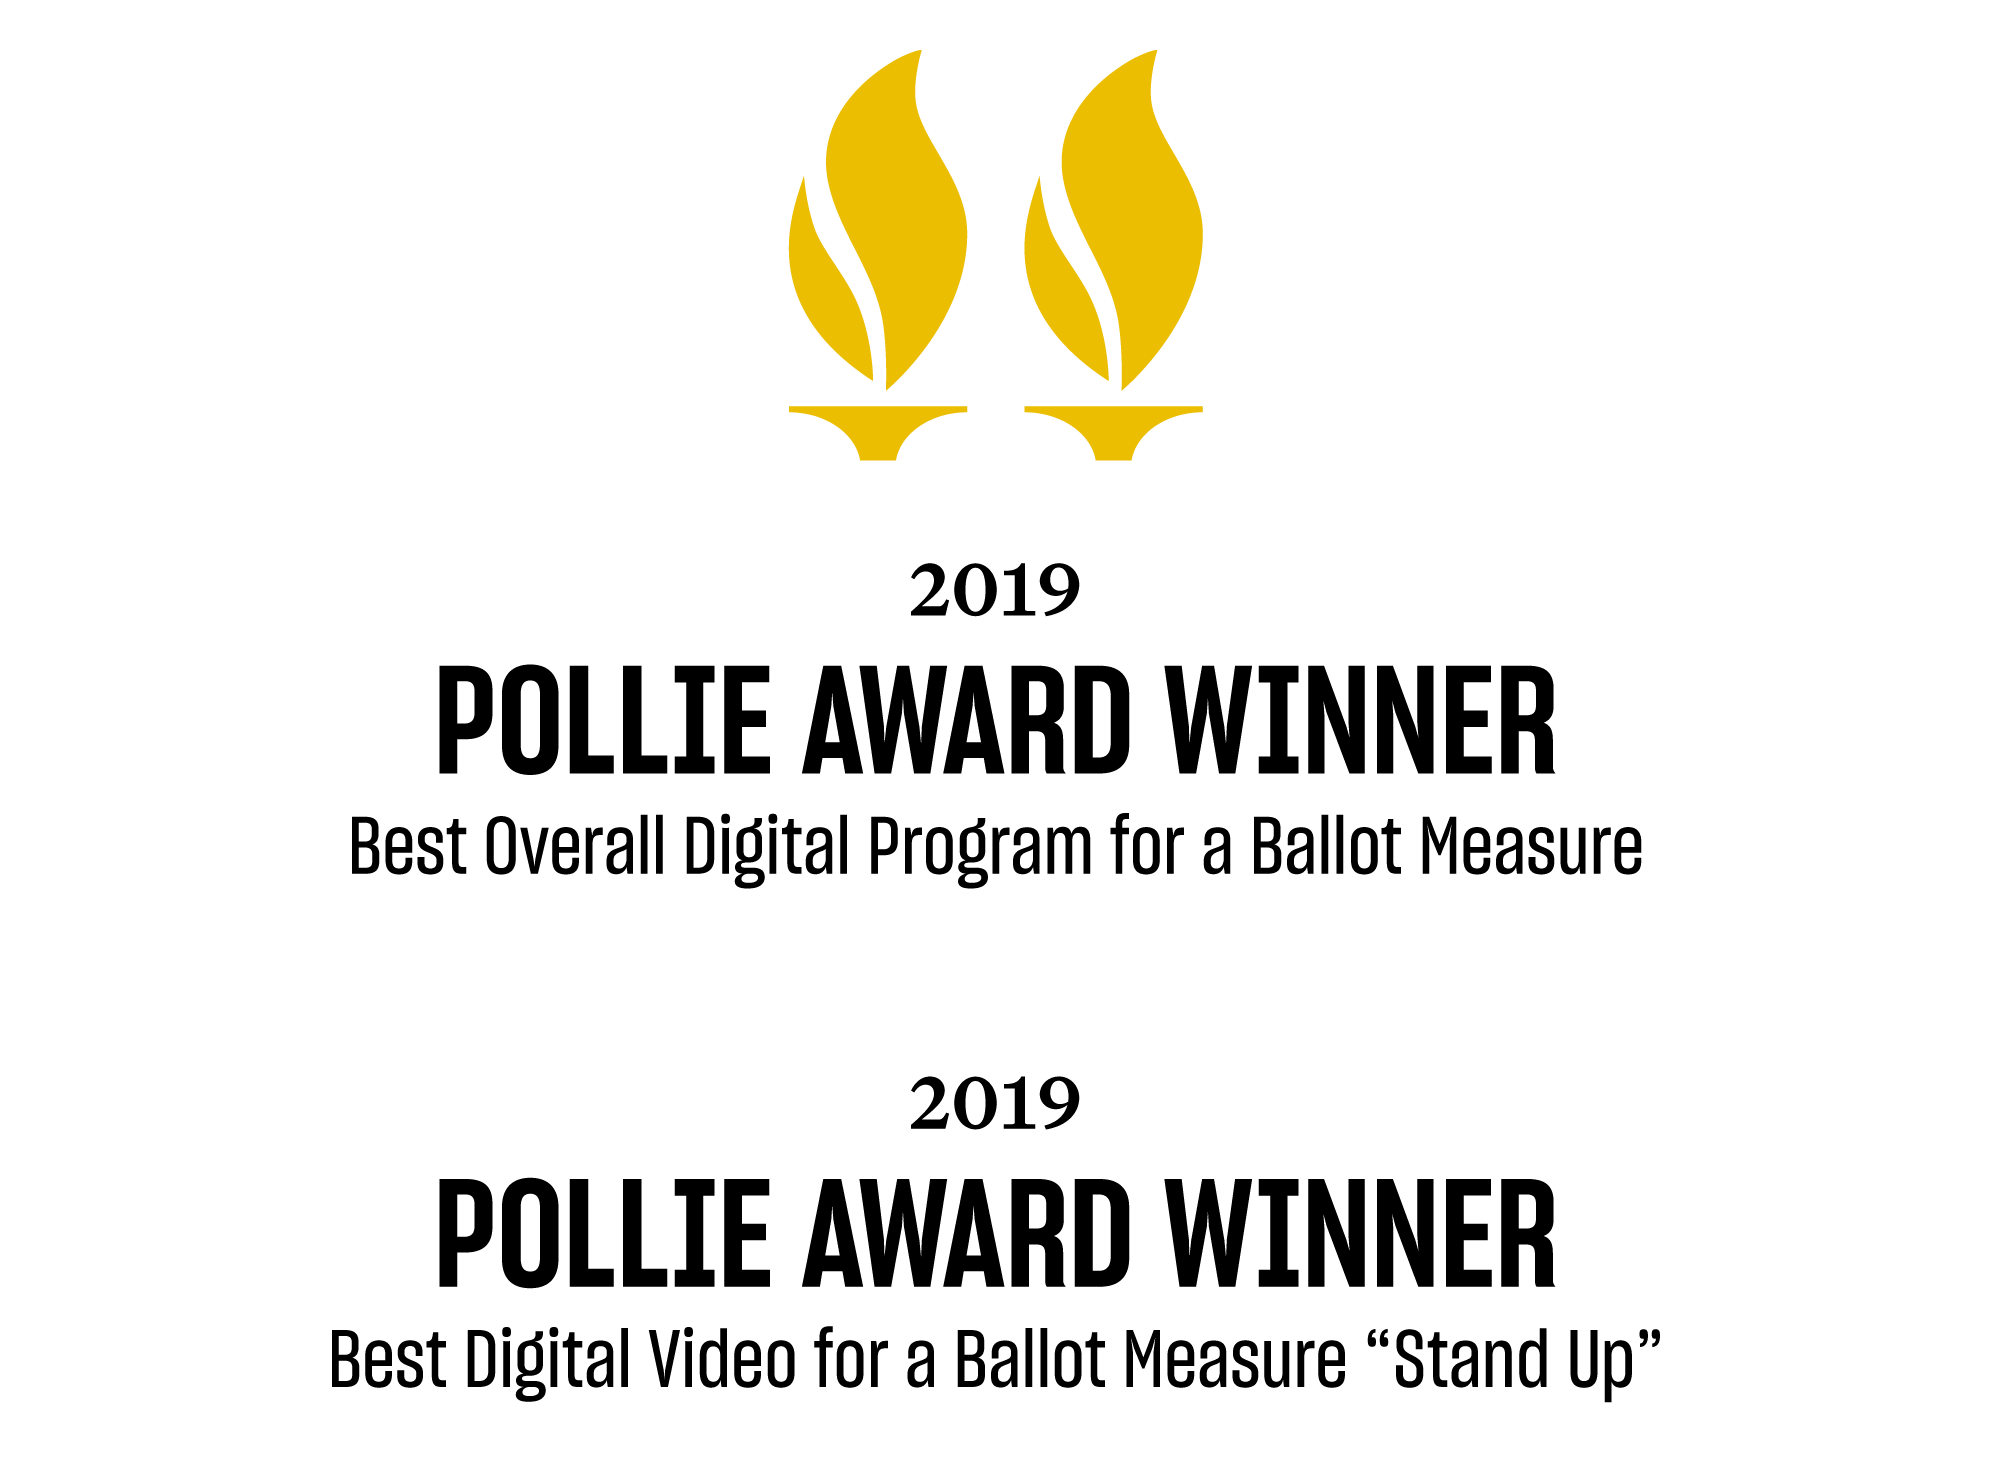 2019 Pollie Award Winner, Best Overall Digital Program for a Ballot Measure. 2019 Pollie Award Winner, Best Digital Video for a Ballot Measure "Stand Up".